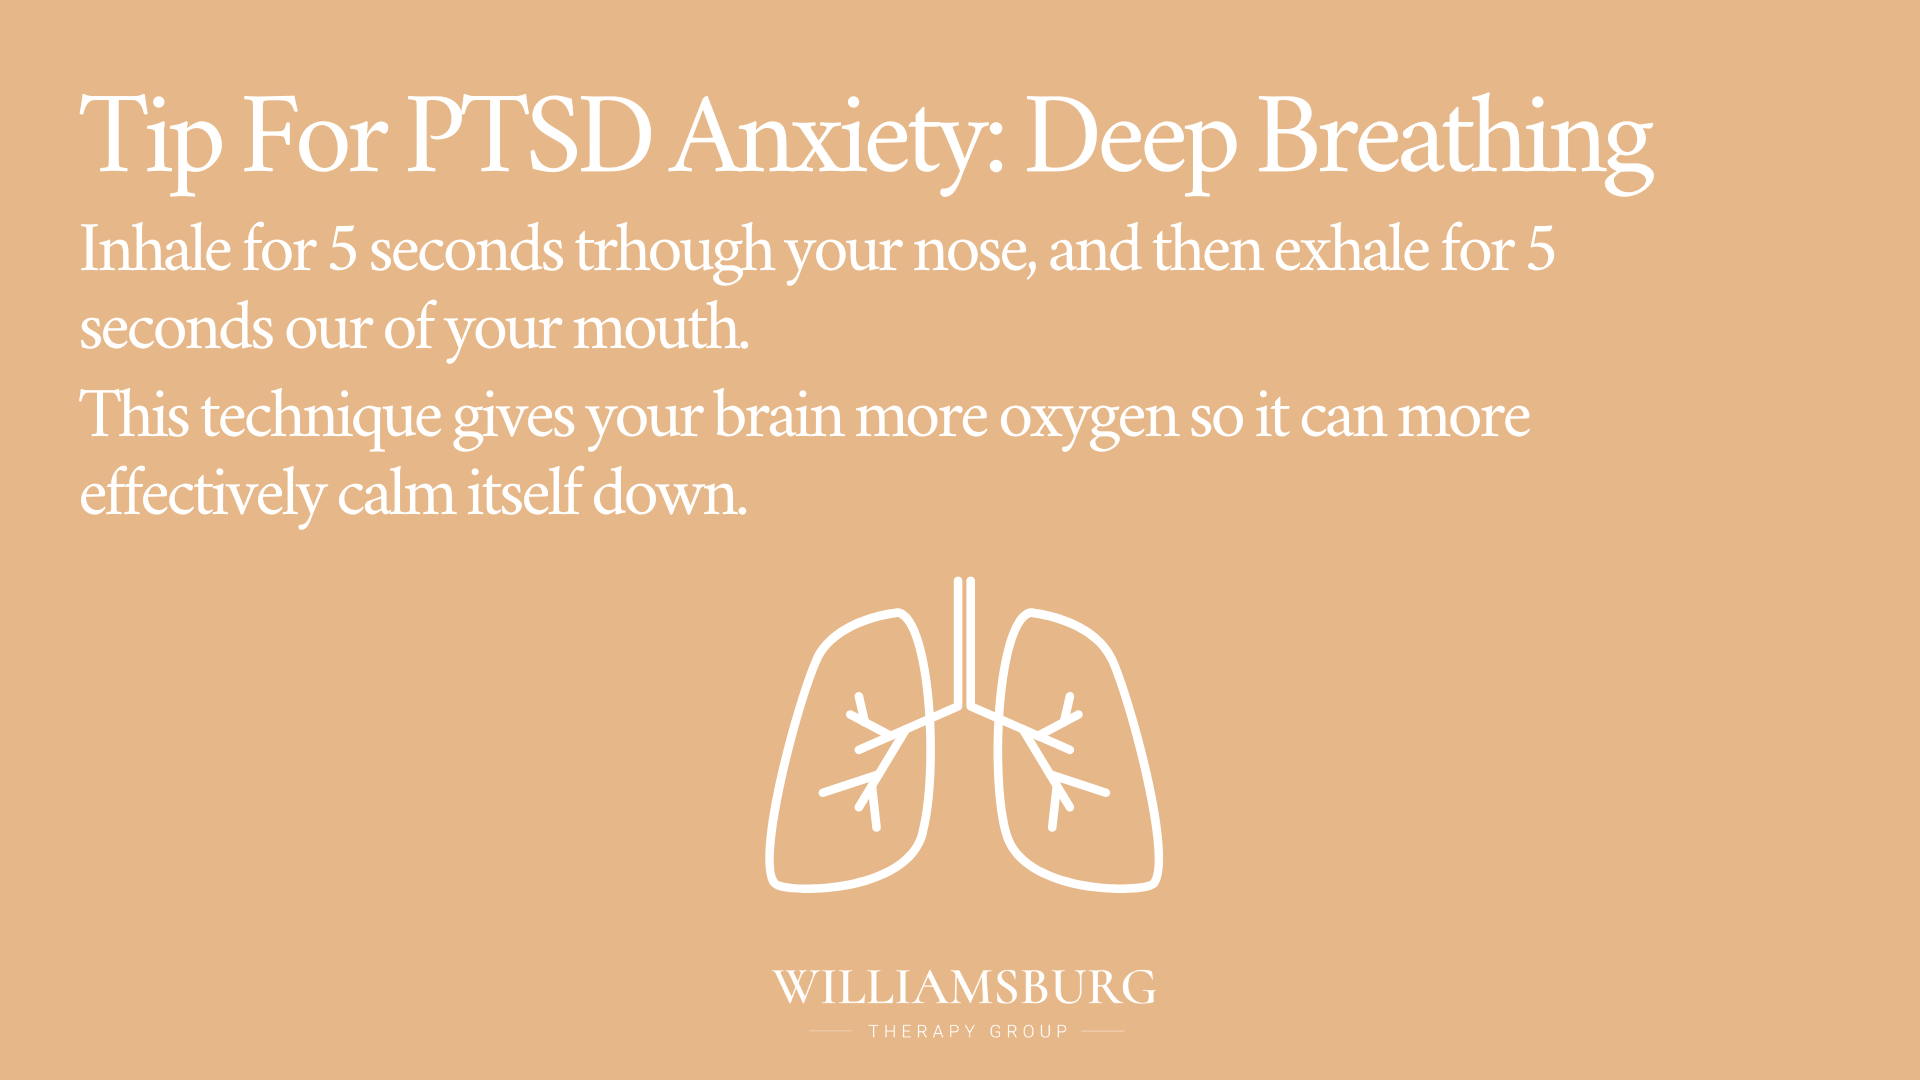 PTSD Anxiety (1920 × 1080 px) (1)